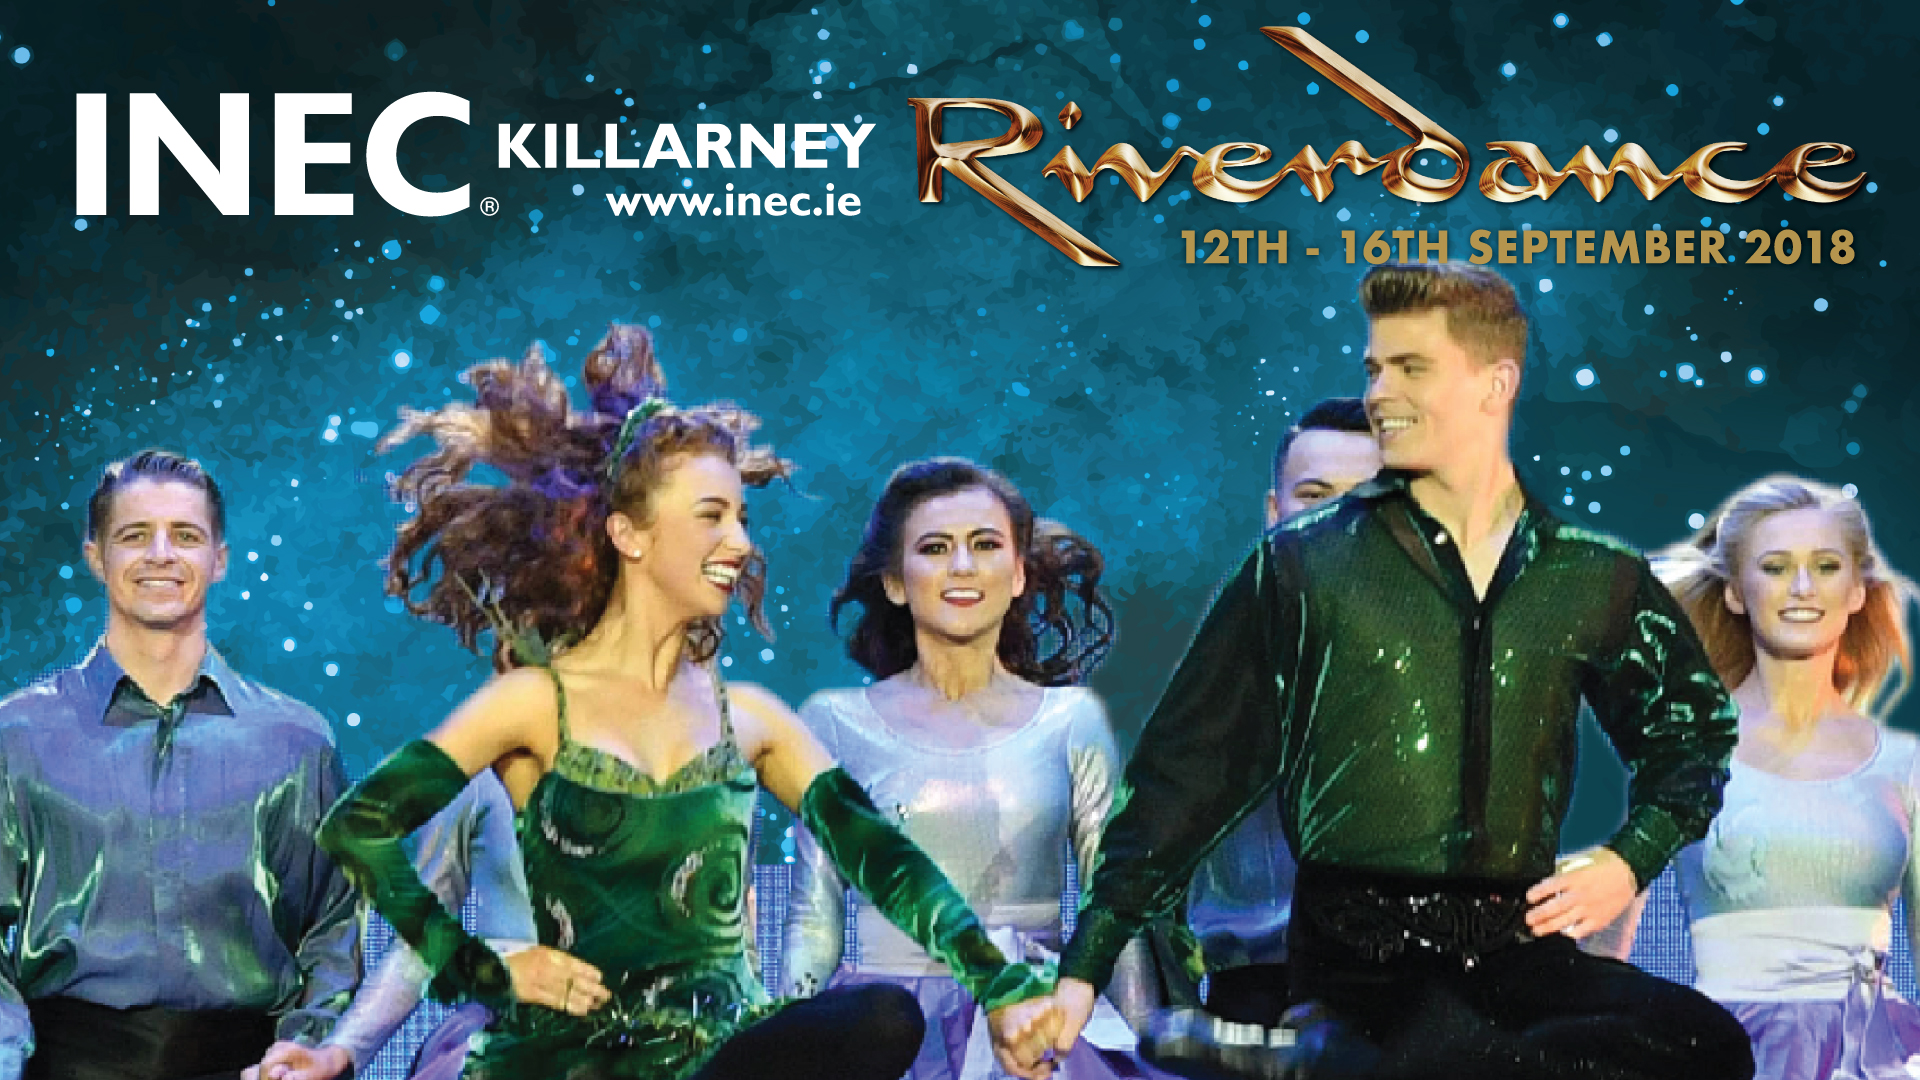 The international Irish Dancing phenomenon Riverdance returns to the INEC Killarney from 12th - 16th September 2018